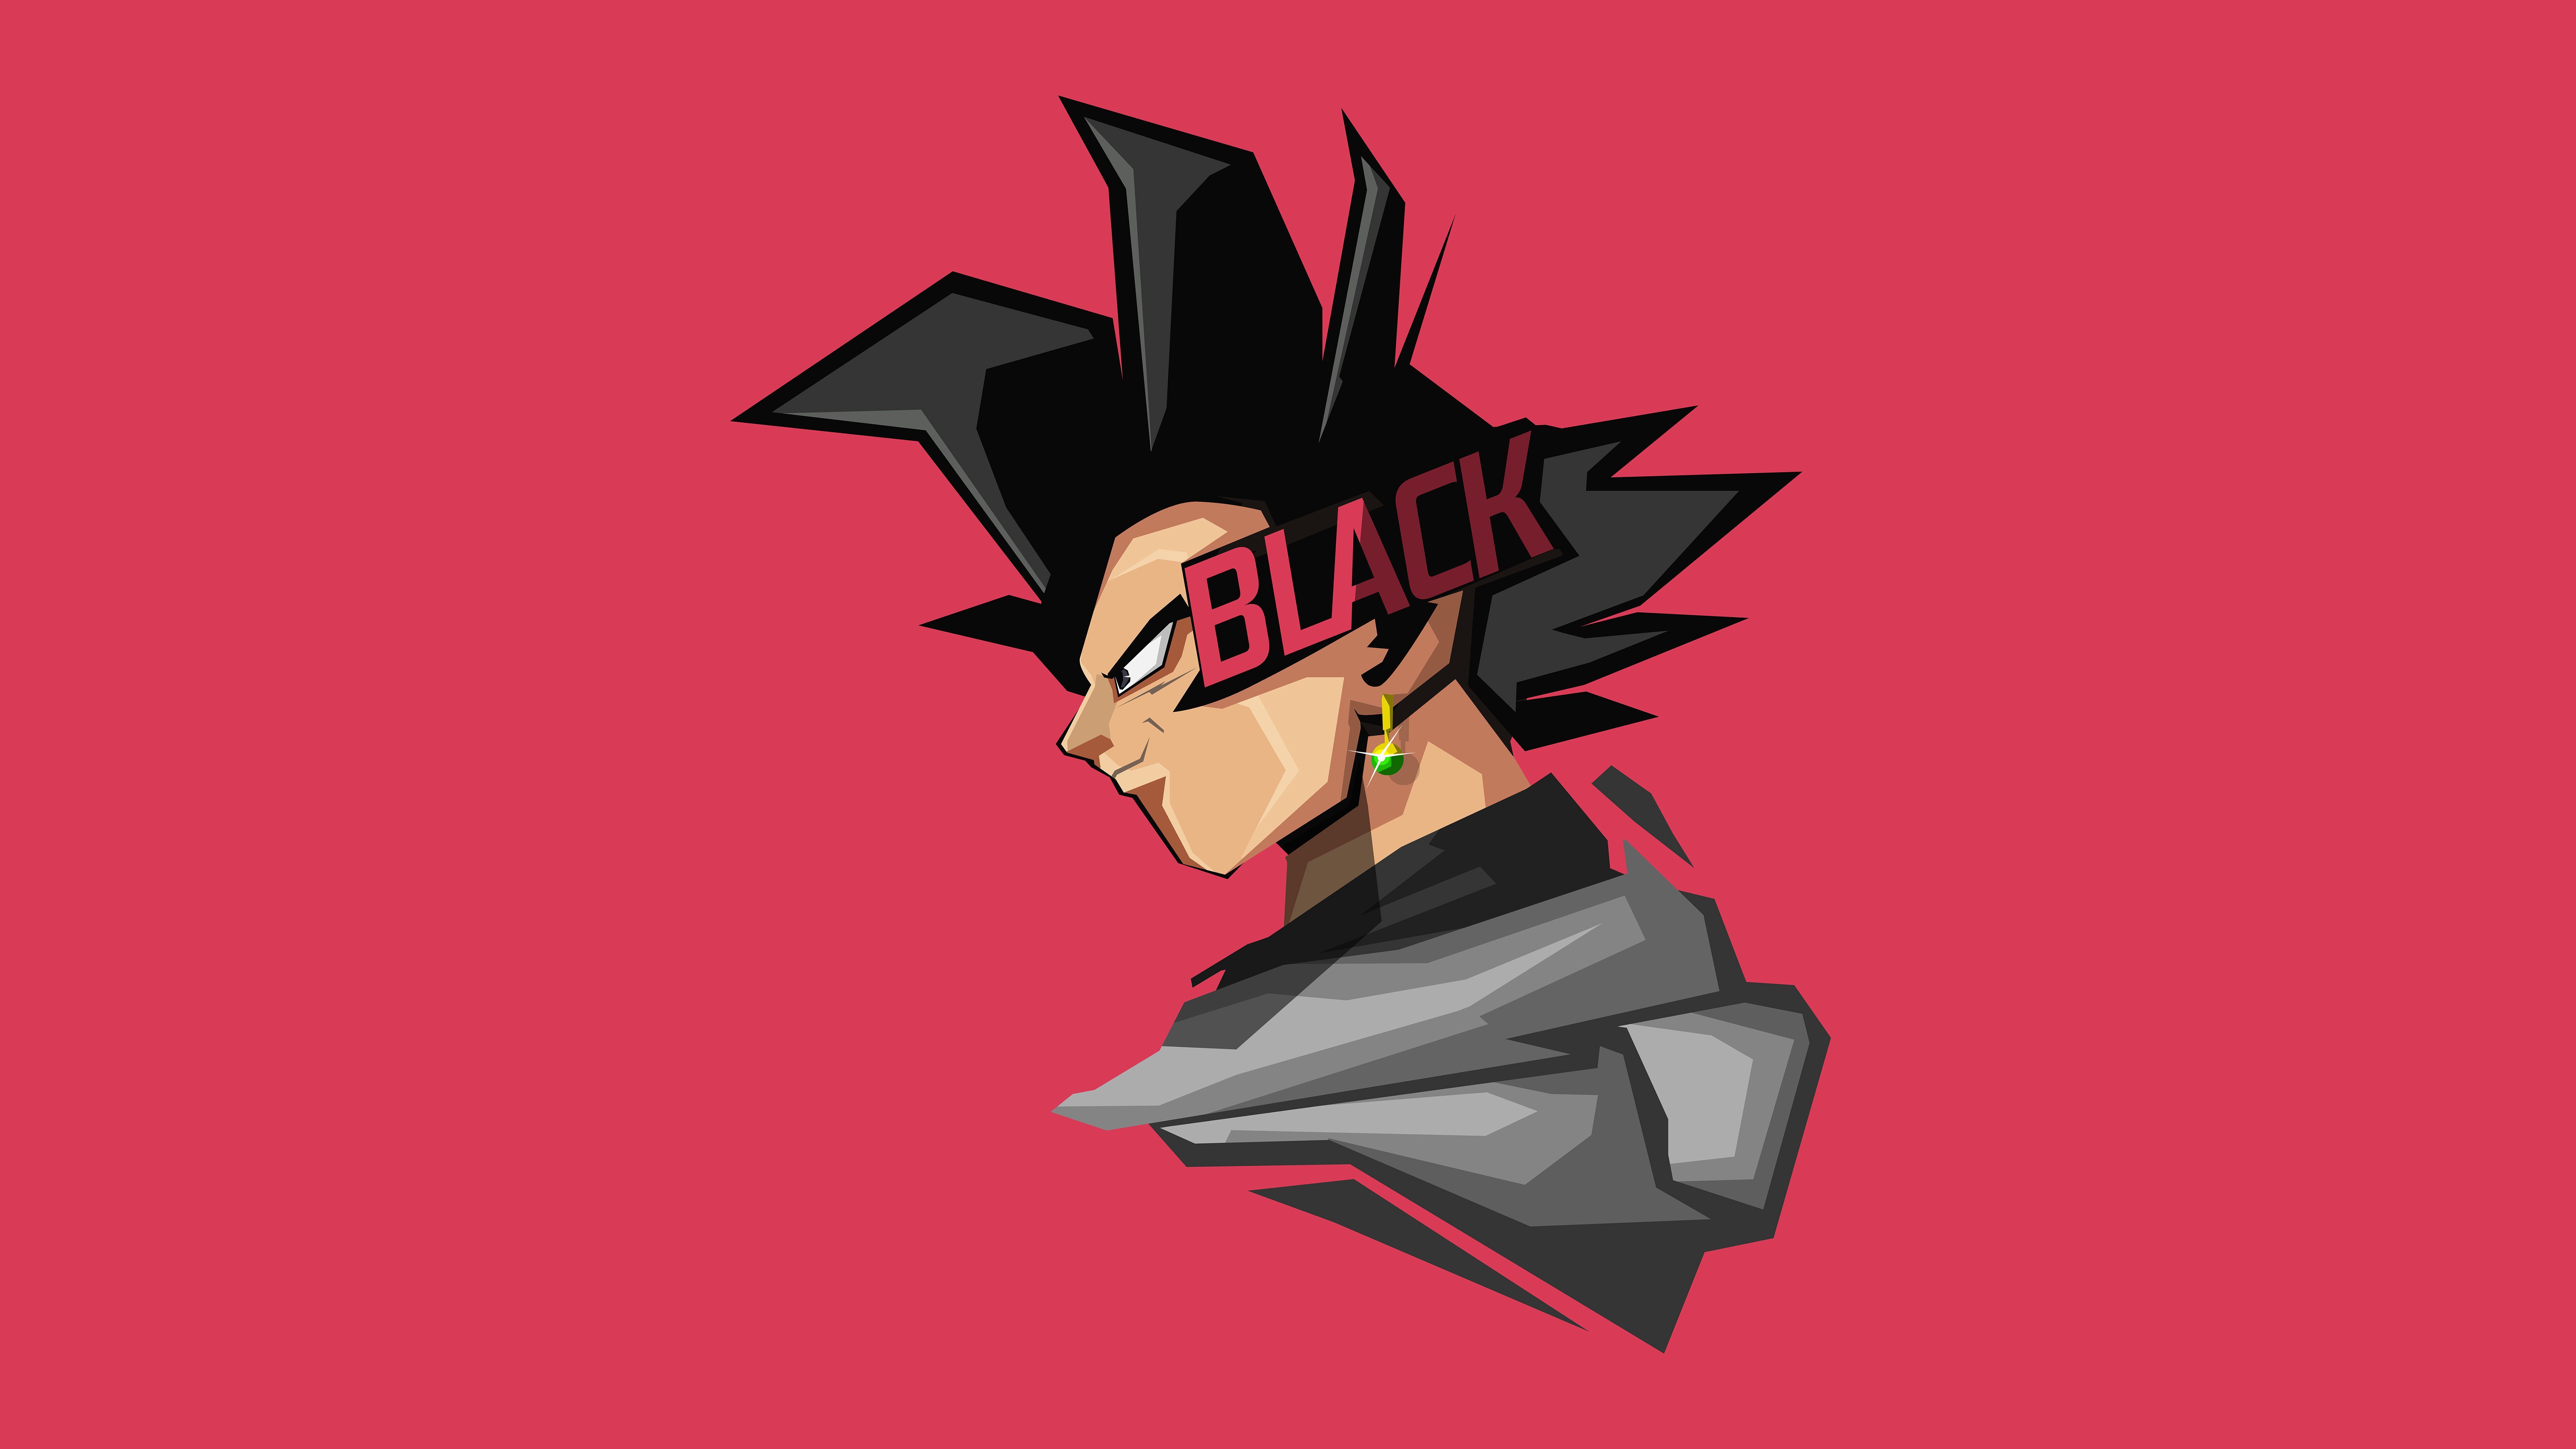 Goku Black Minimal Artwork 4K 8K. Goku black, Goku wallpaper